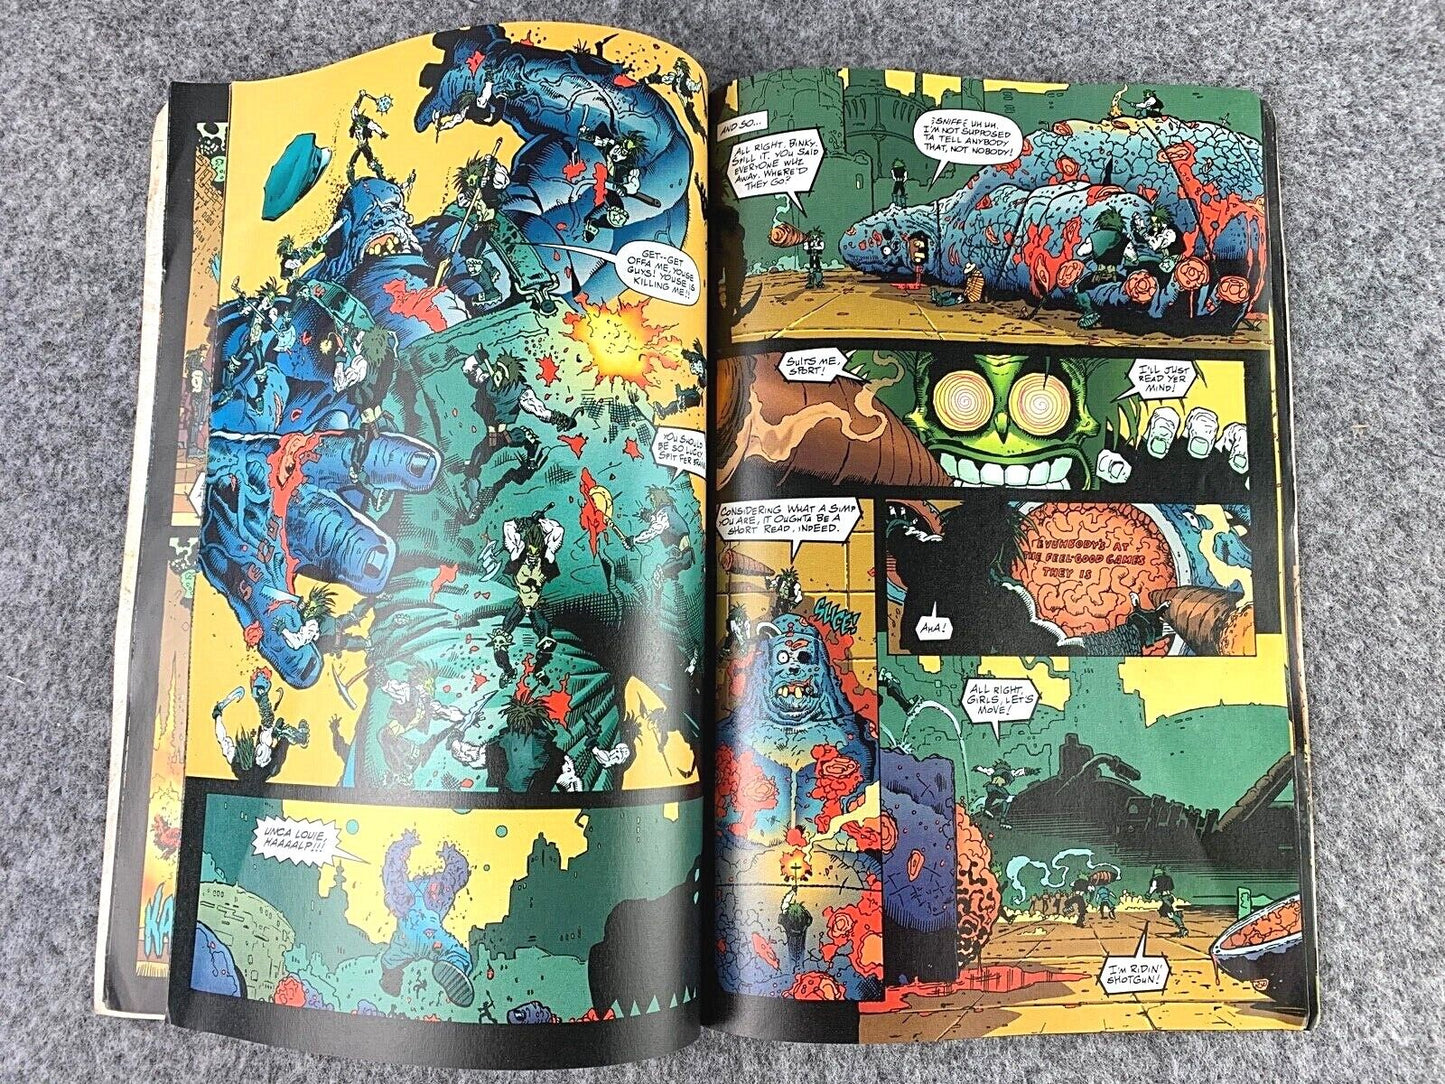 Lobo vs The Mask by DC Comics 1997 Vintage Set of 2 Rare Novels